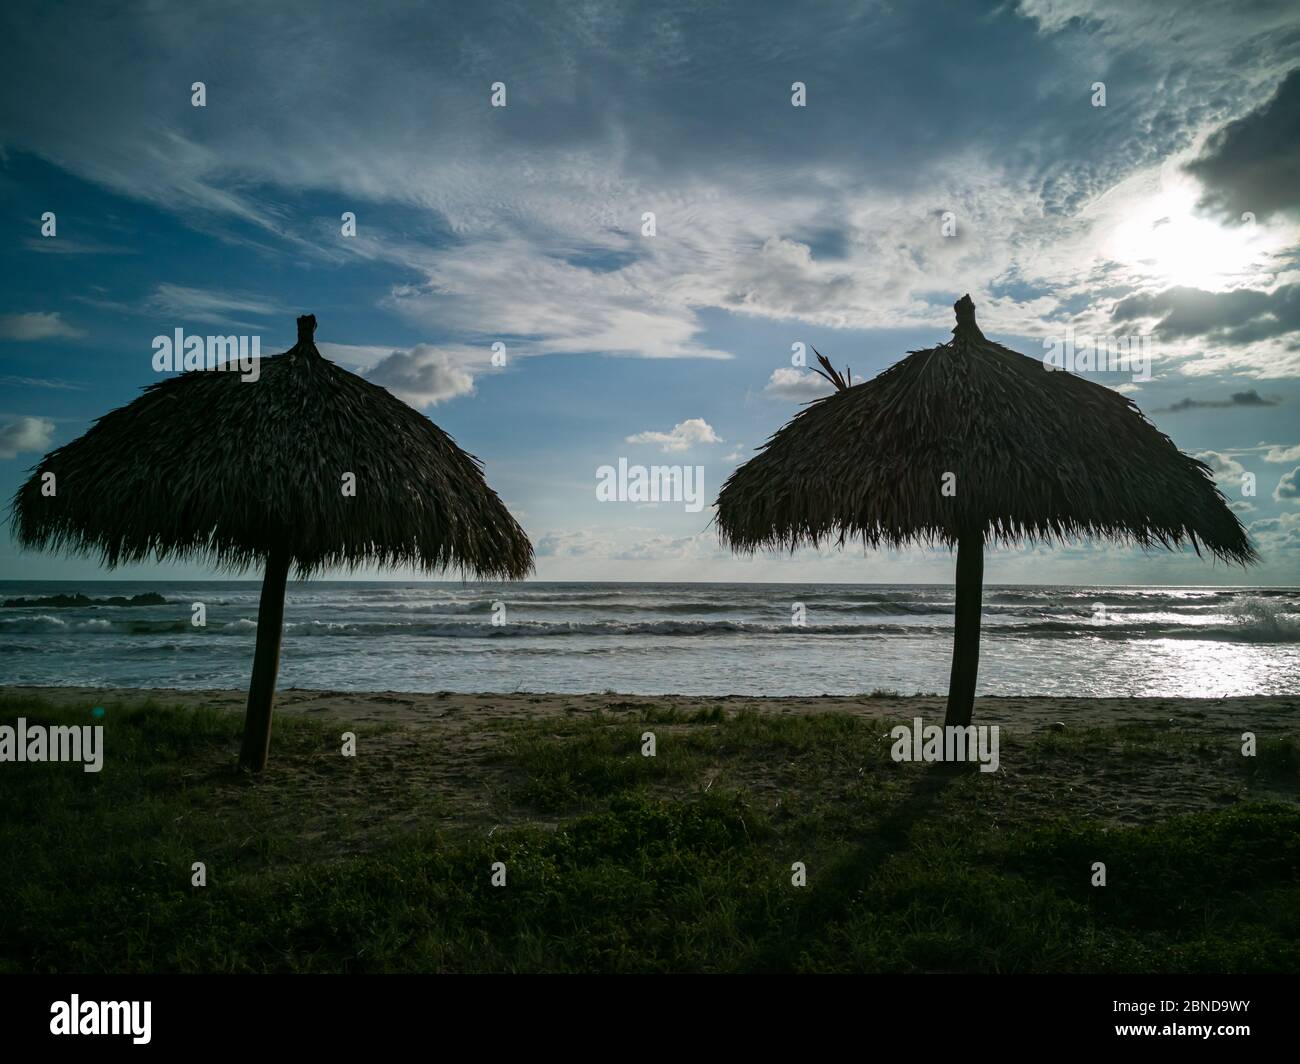 Pair of umbrellas on the beach. Stock Photo